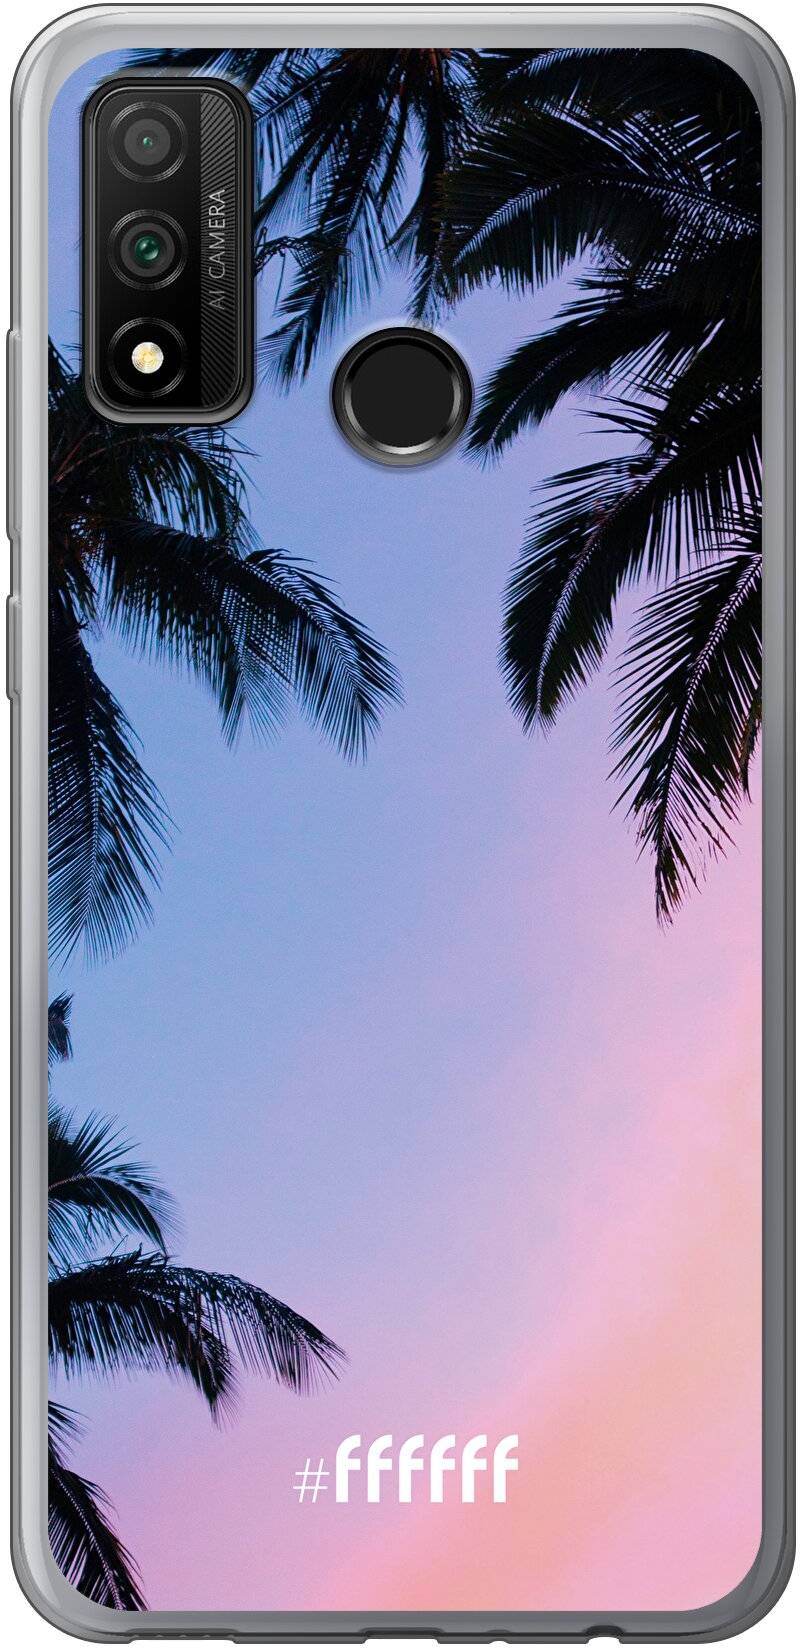 Sunset Palms P Smart (2020)